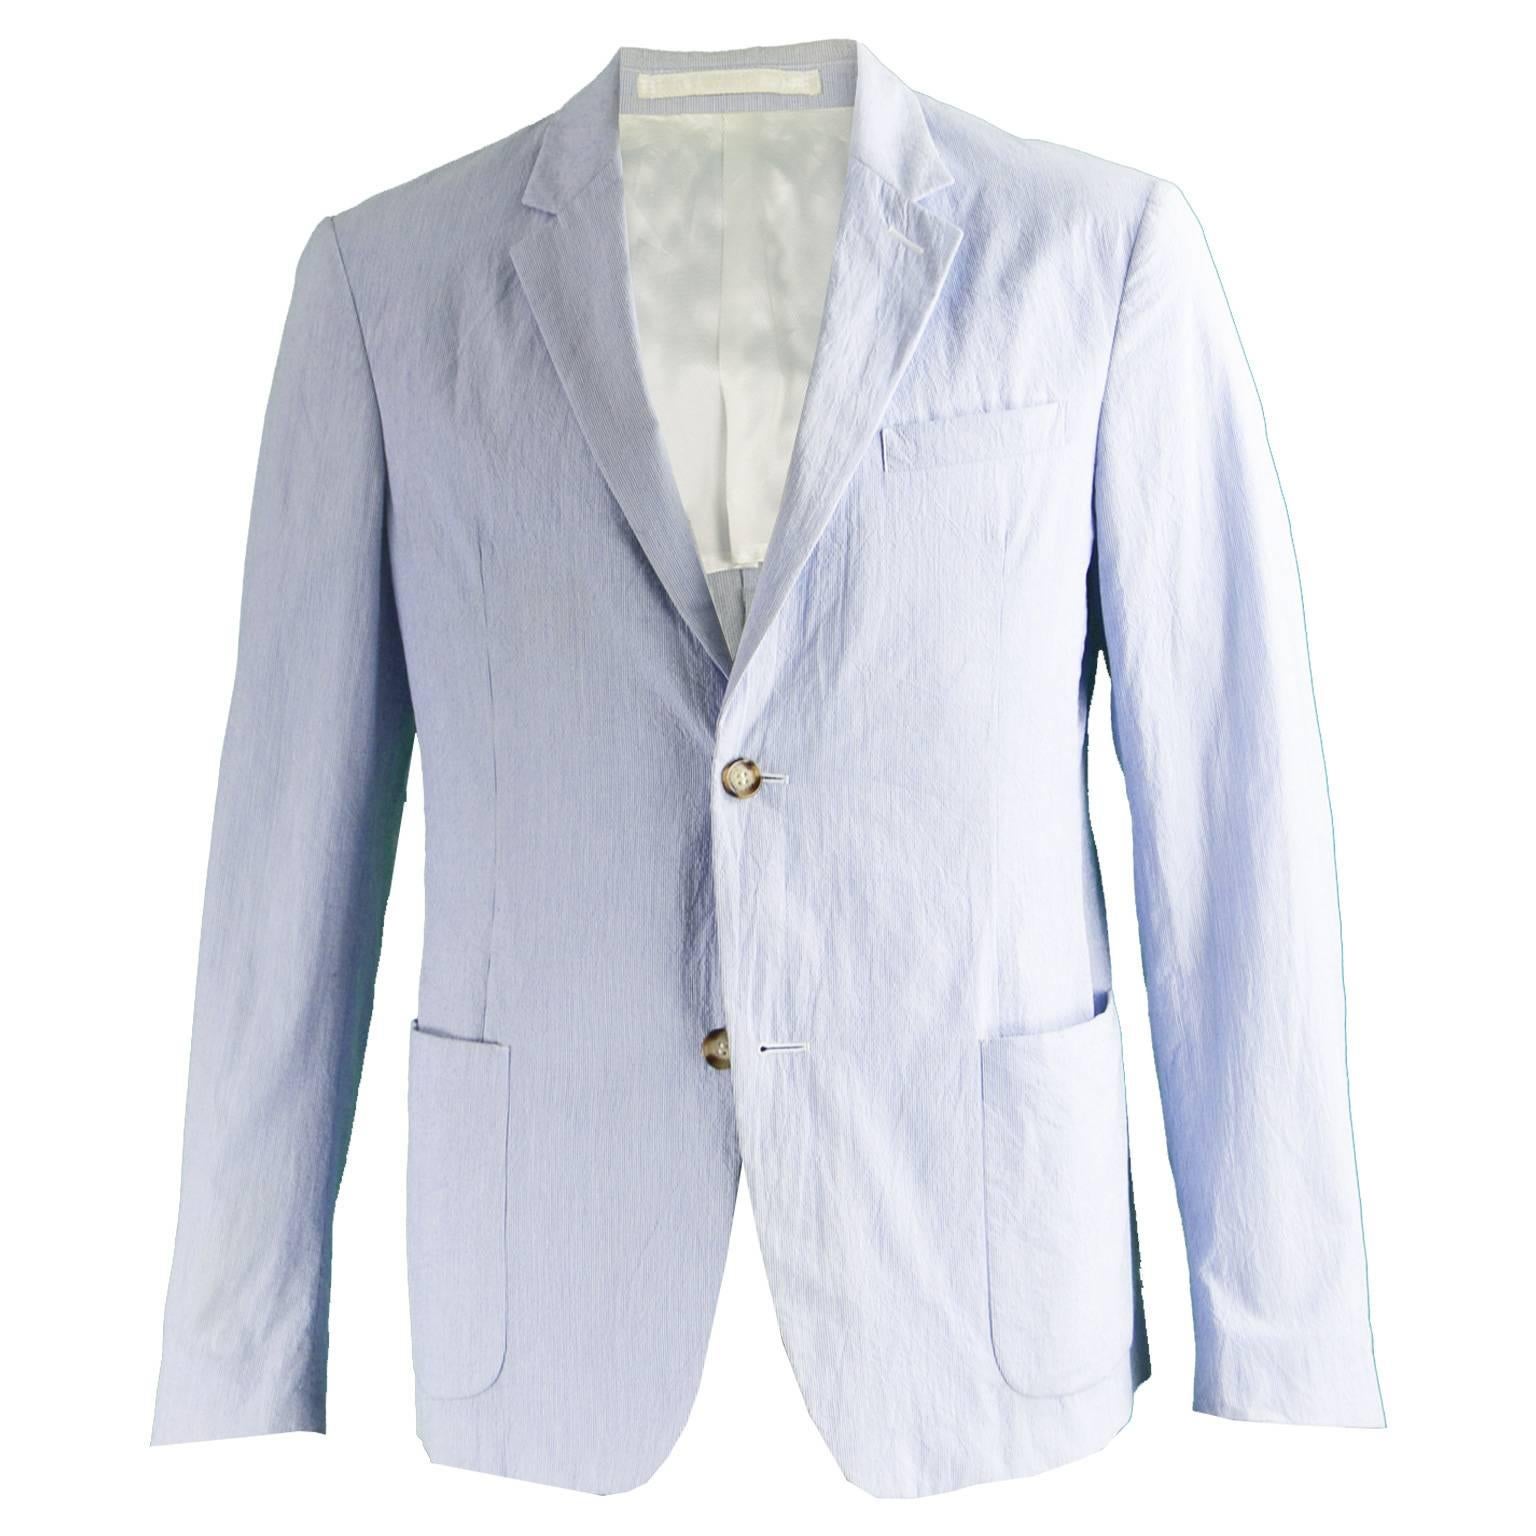 Prada Men's Blue & White Lightweight Cotton Nautical Spring Blazer